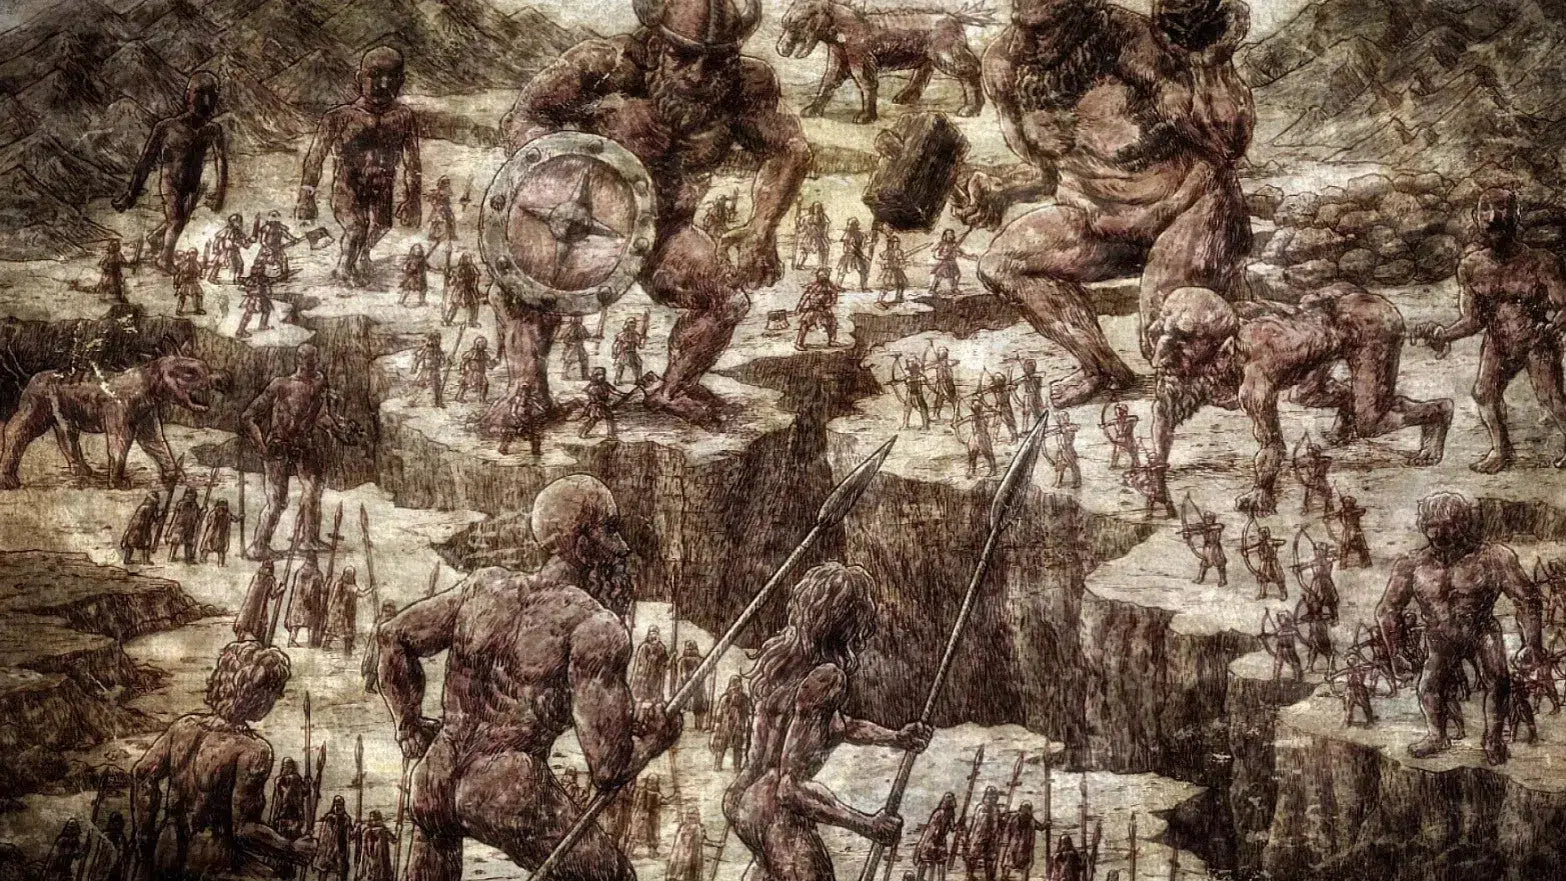 Attack On Titan | The Great Titan War